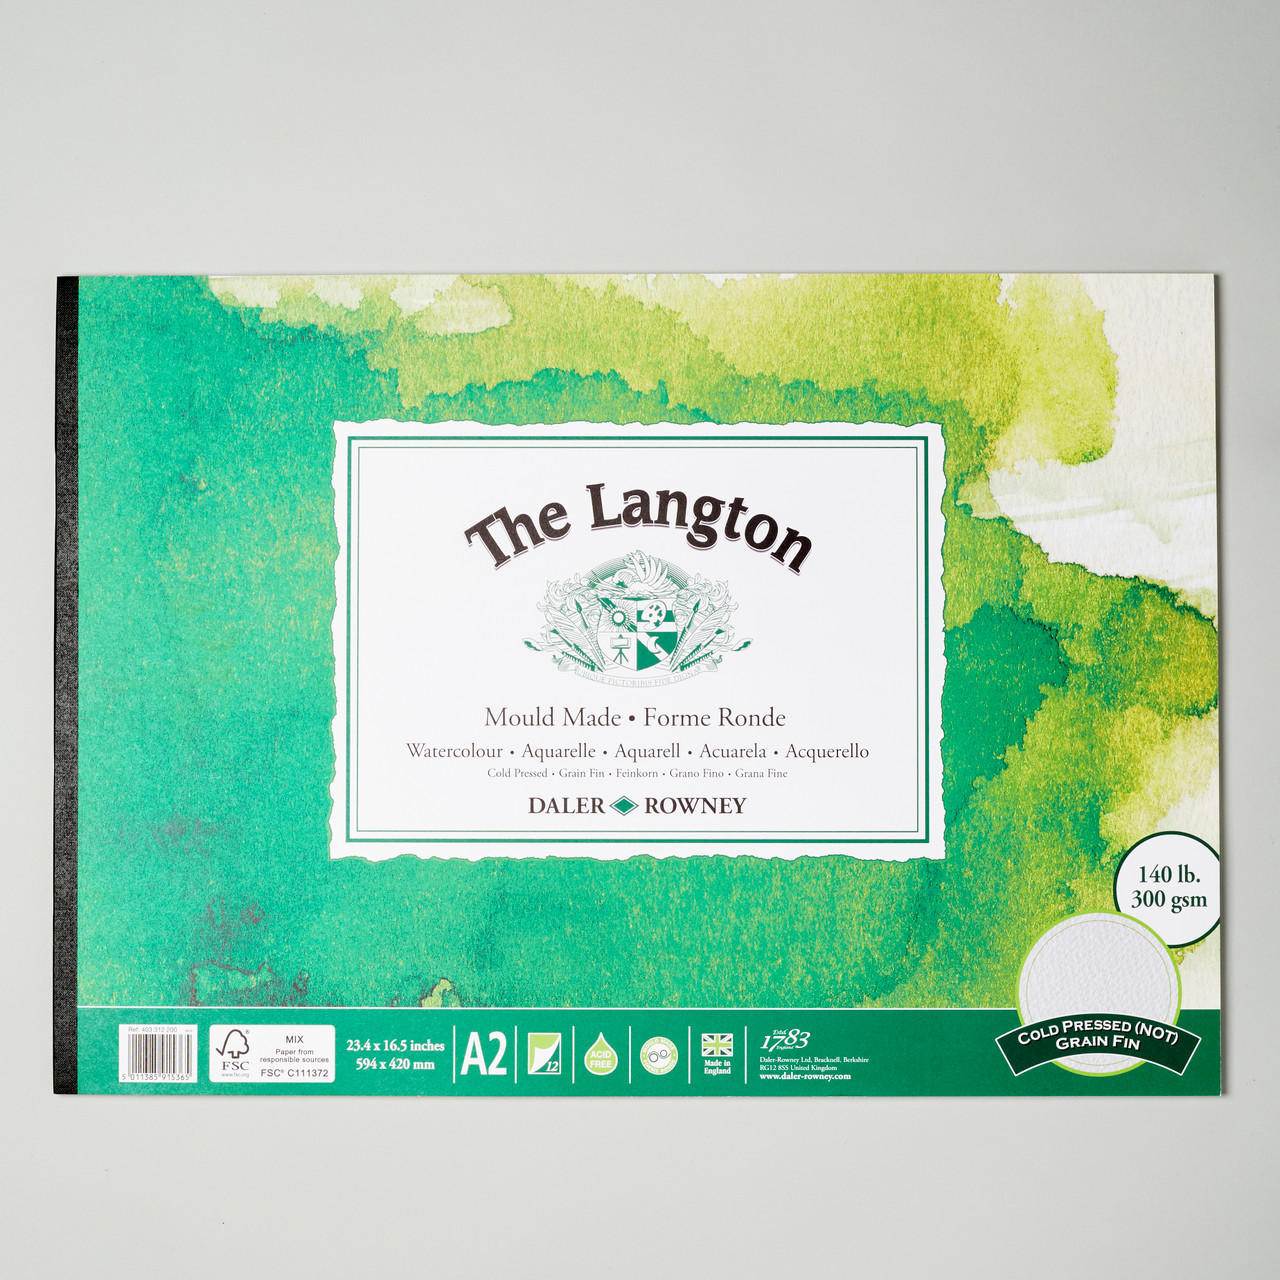 The Langton Daler Rowney Langton Watercolour Pad 300gsm 12 sheets Not A2